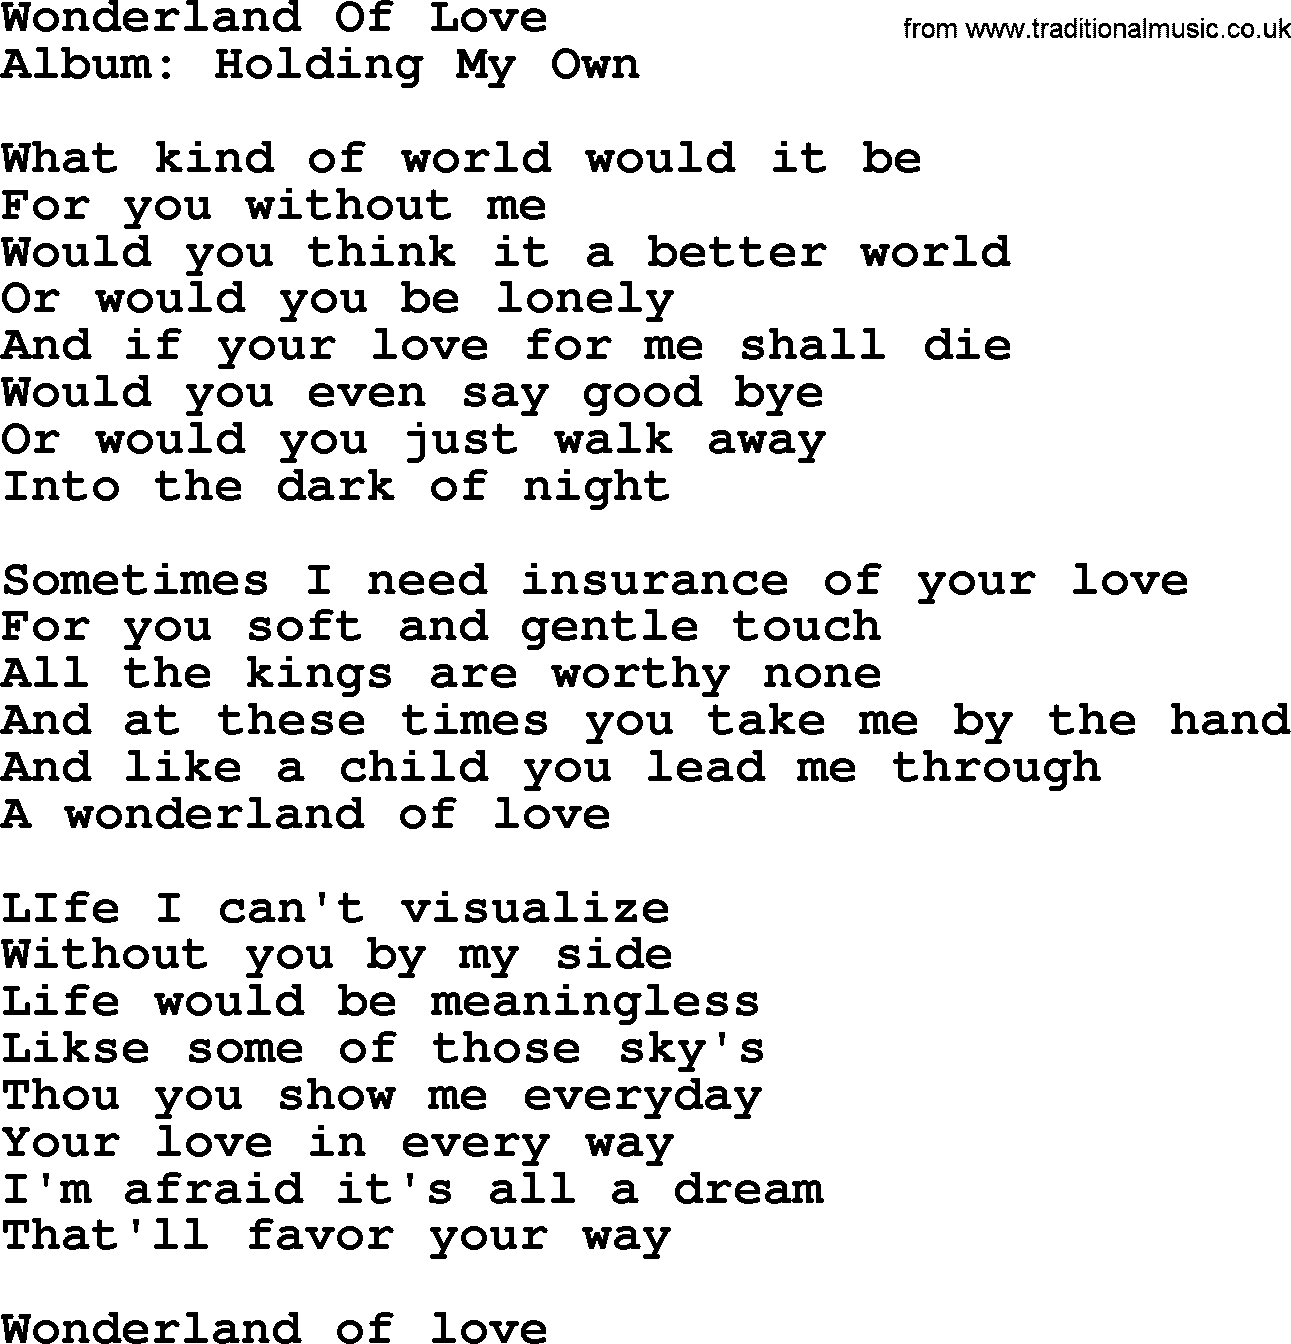 George Strait song: Wonderland Of Love, lyrics